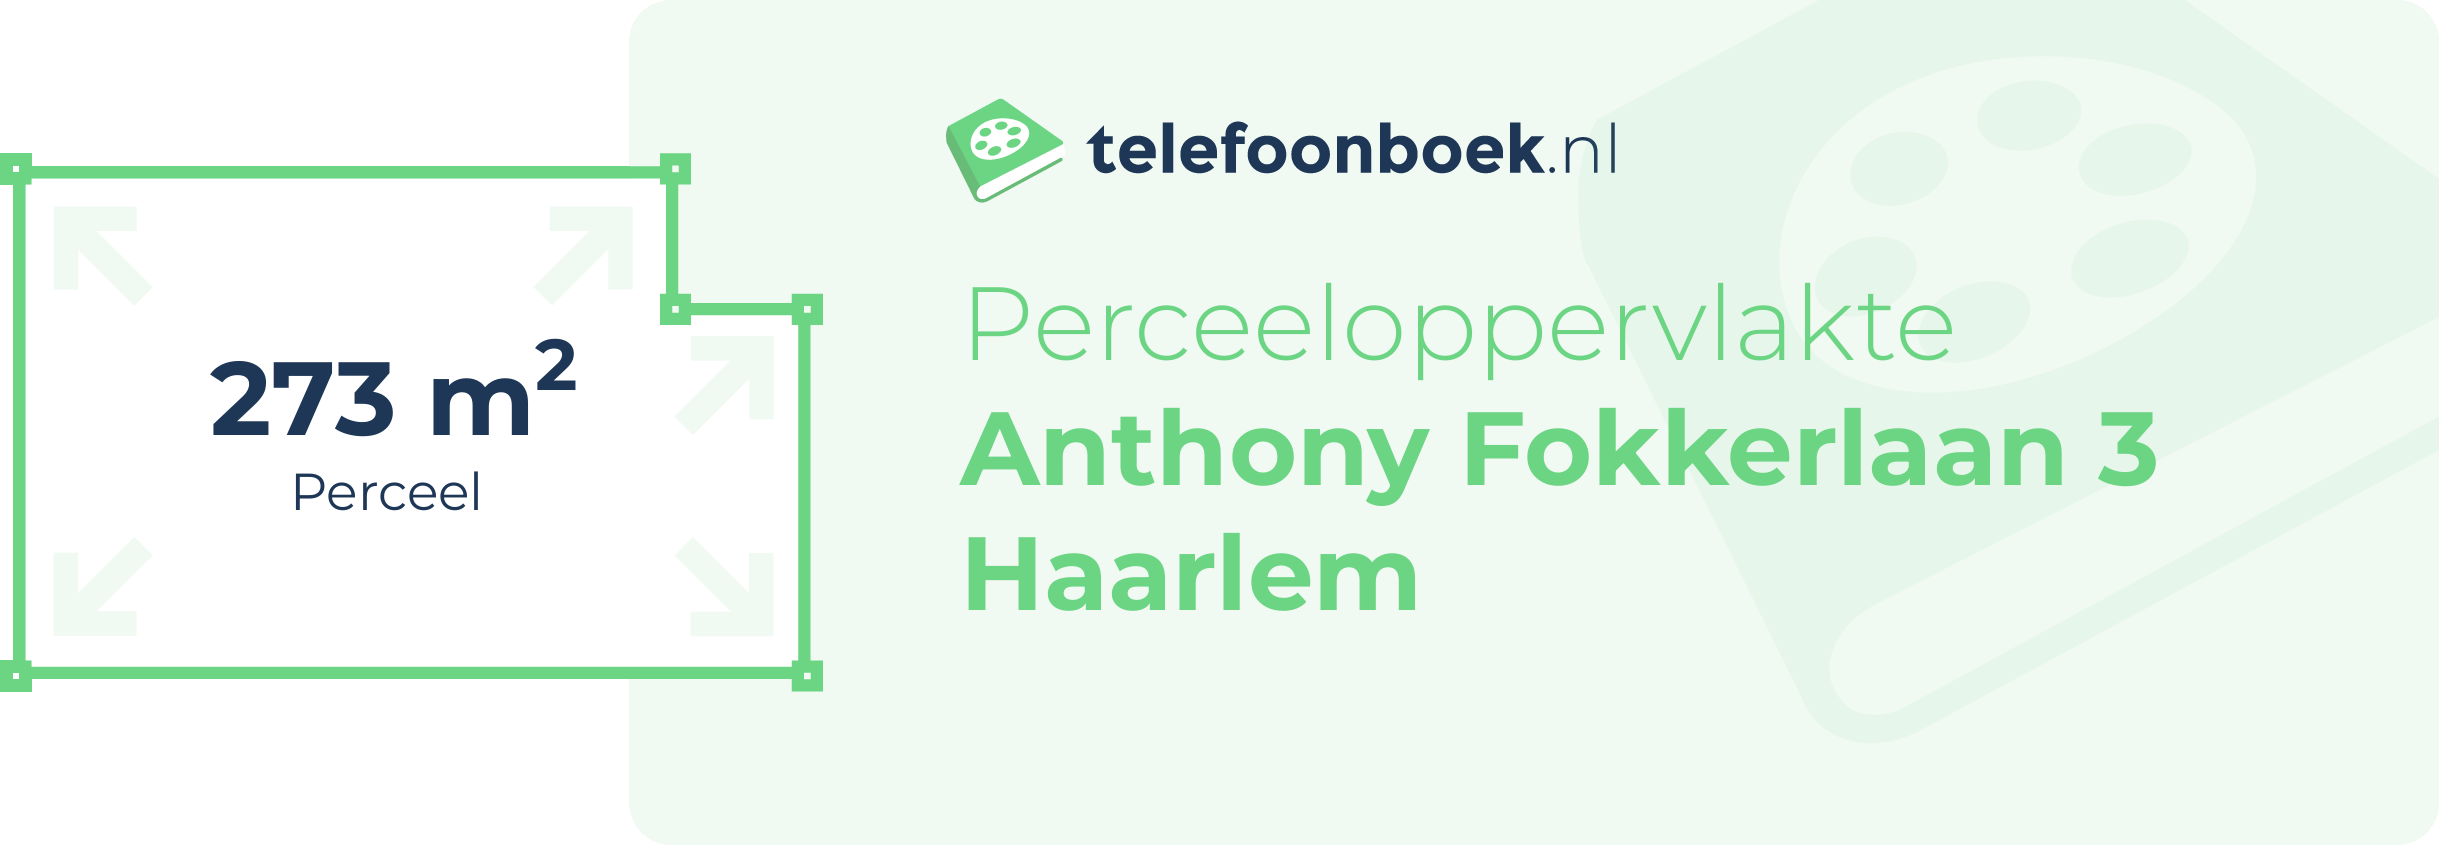 Perceeloppervlakte Anthony Fokkerlaan 3 Haarlem